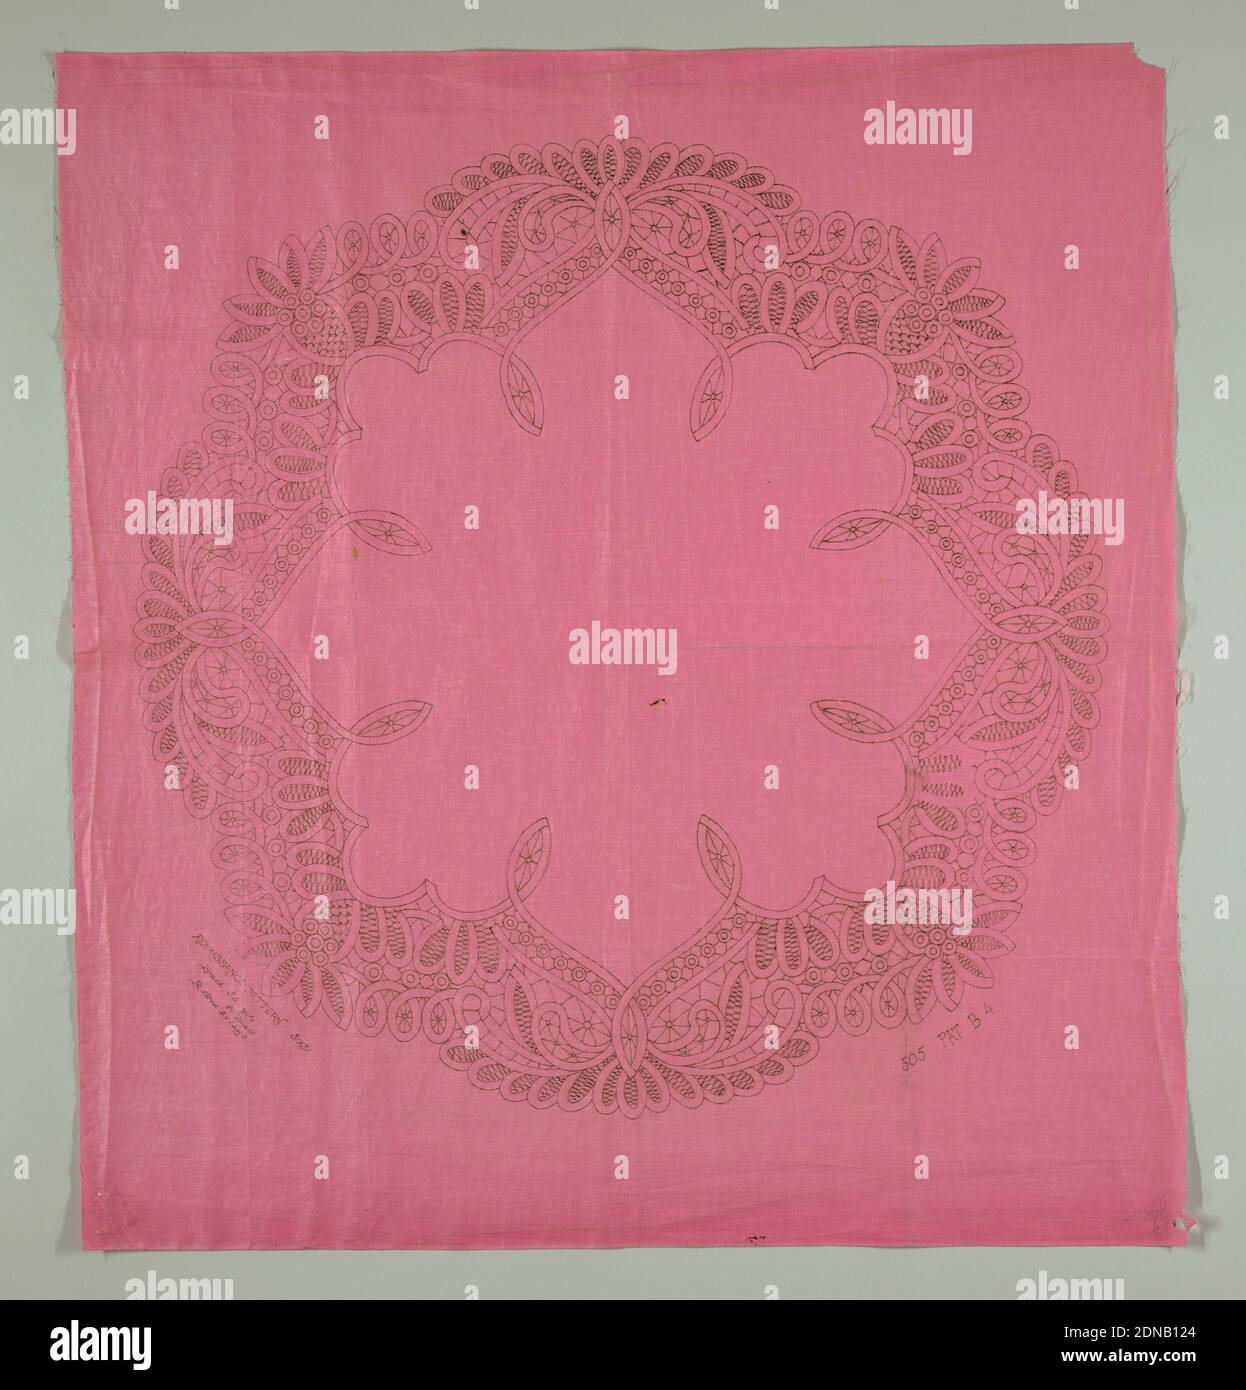 Blush Lace Fabric -  Canada